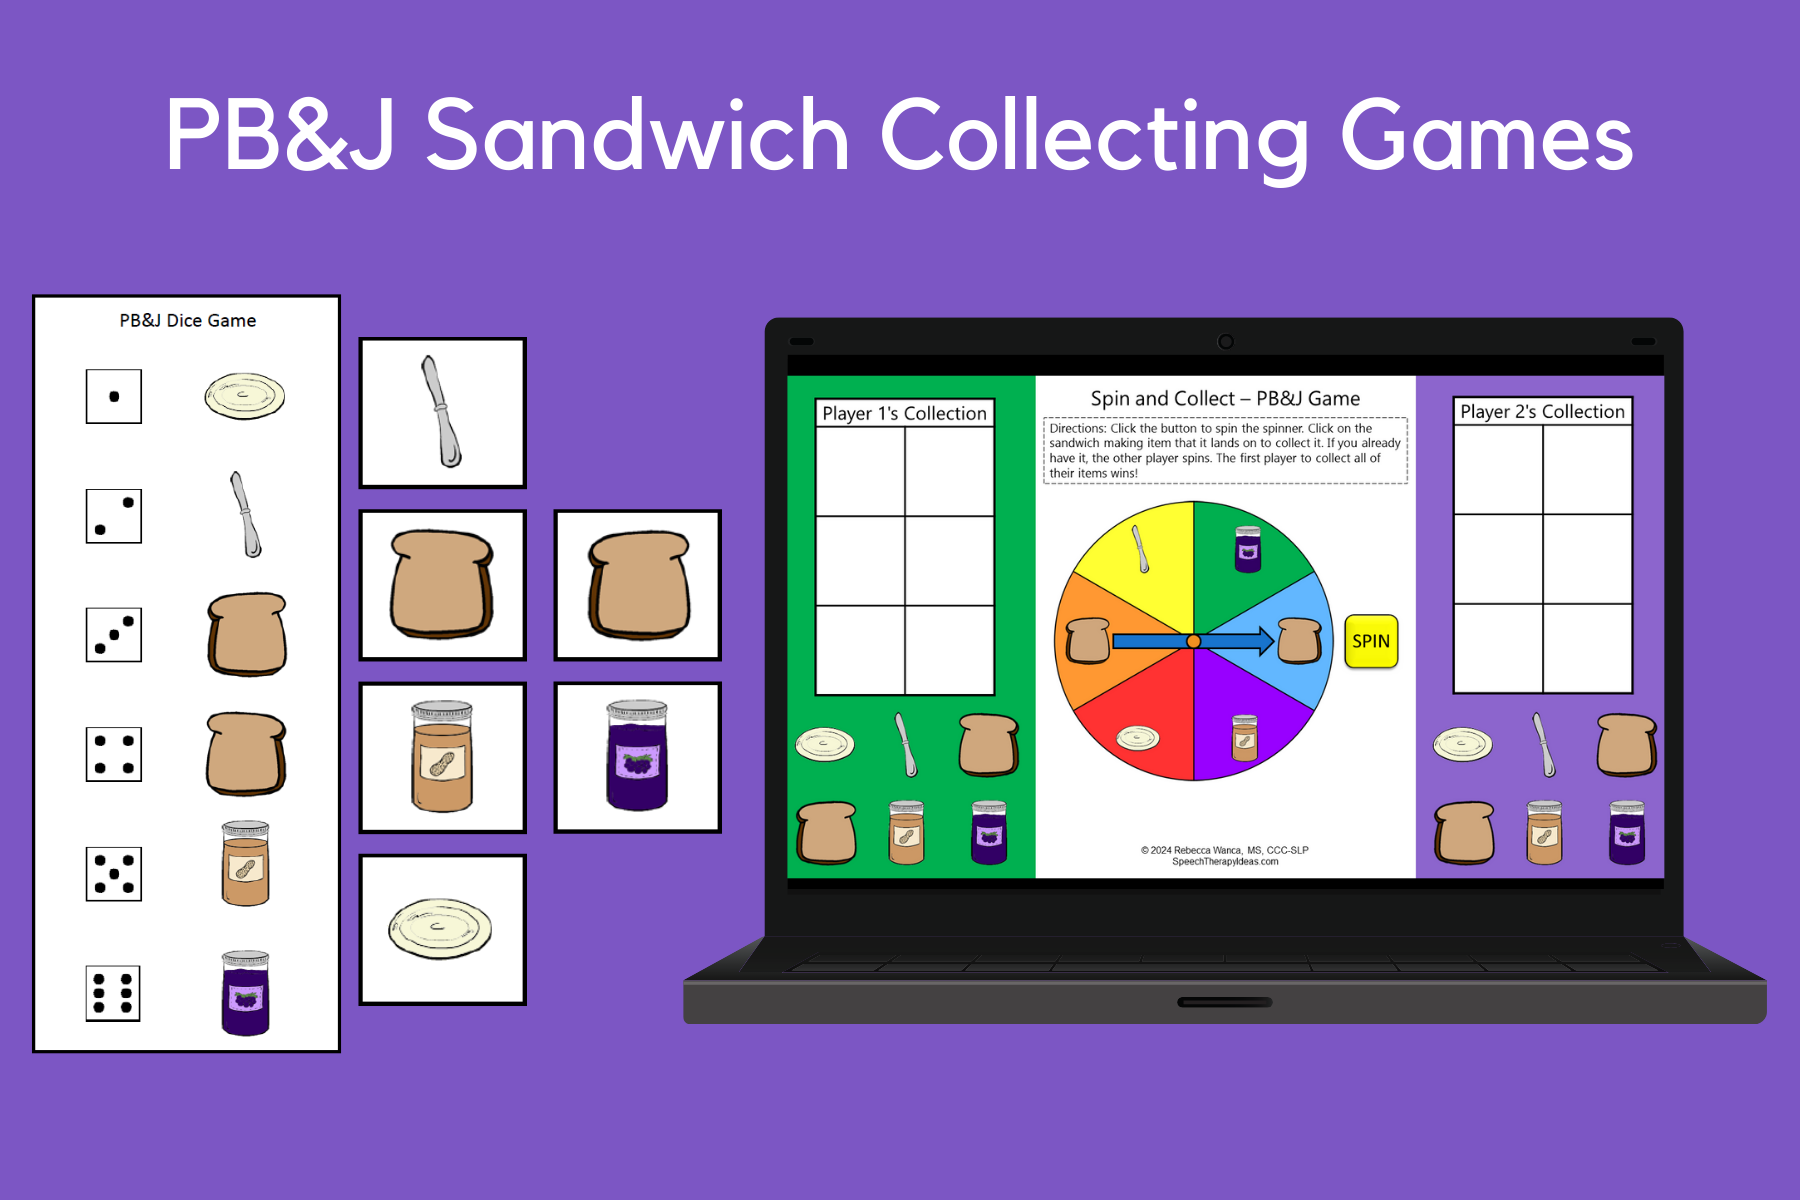 PB&J Sandwich Collecting Games